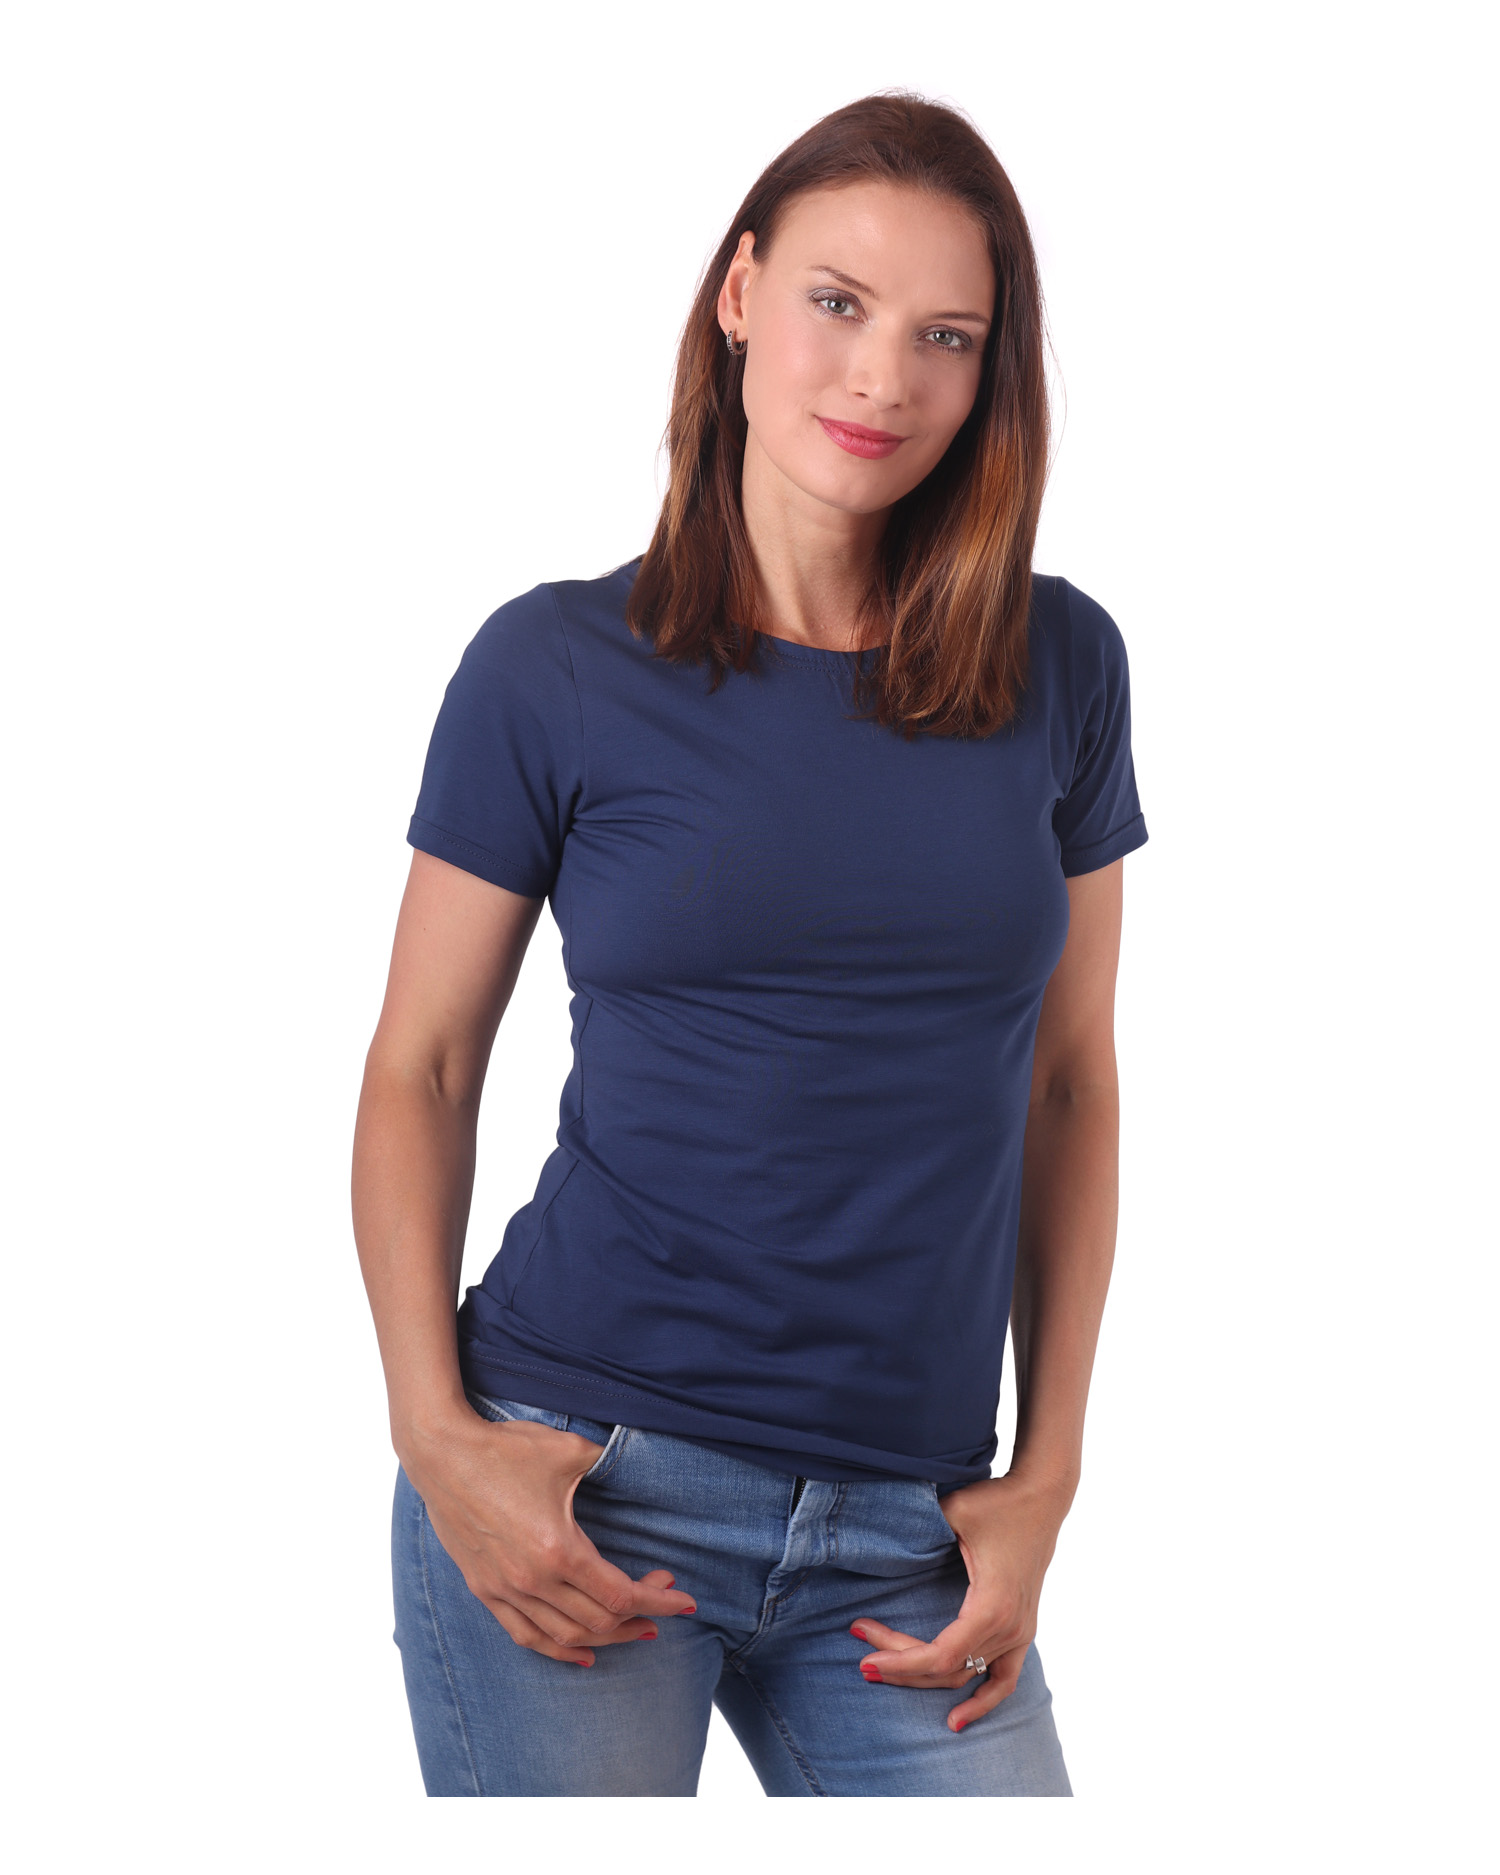 Damen T-Shirt Natalia, Kurzarm, Jeansblau